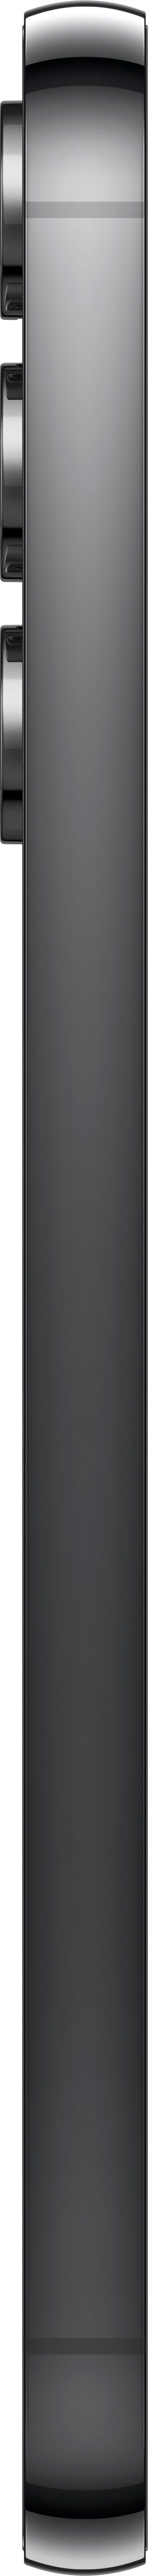 Samsung - Galaxy S23+ 256GB - Phantom Black (Verizon)_8